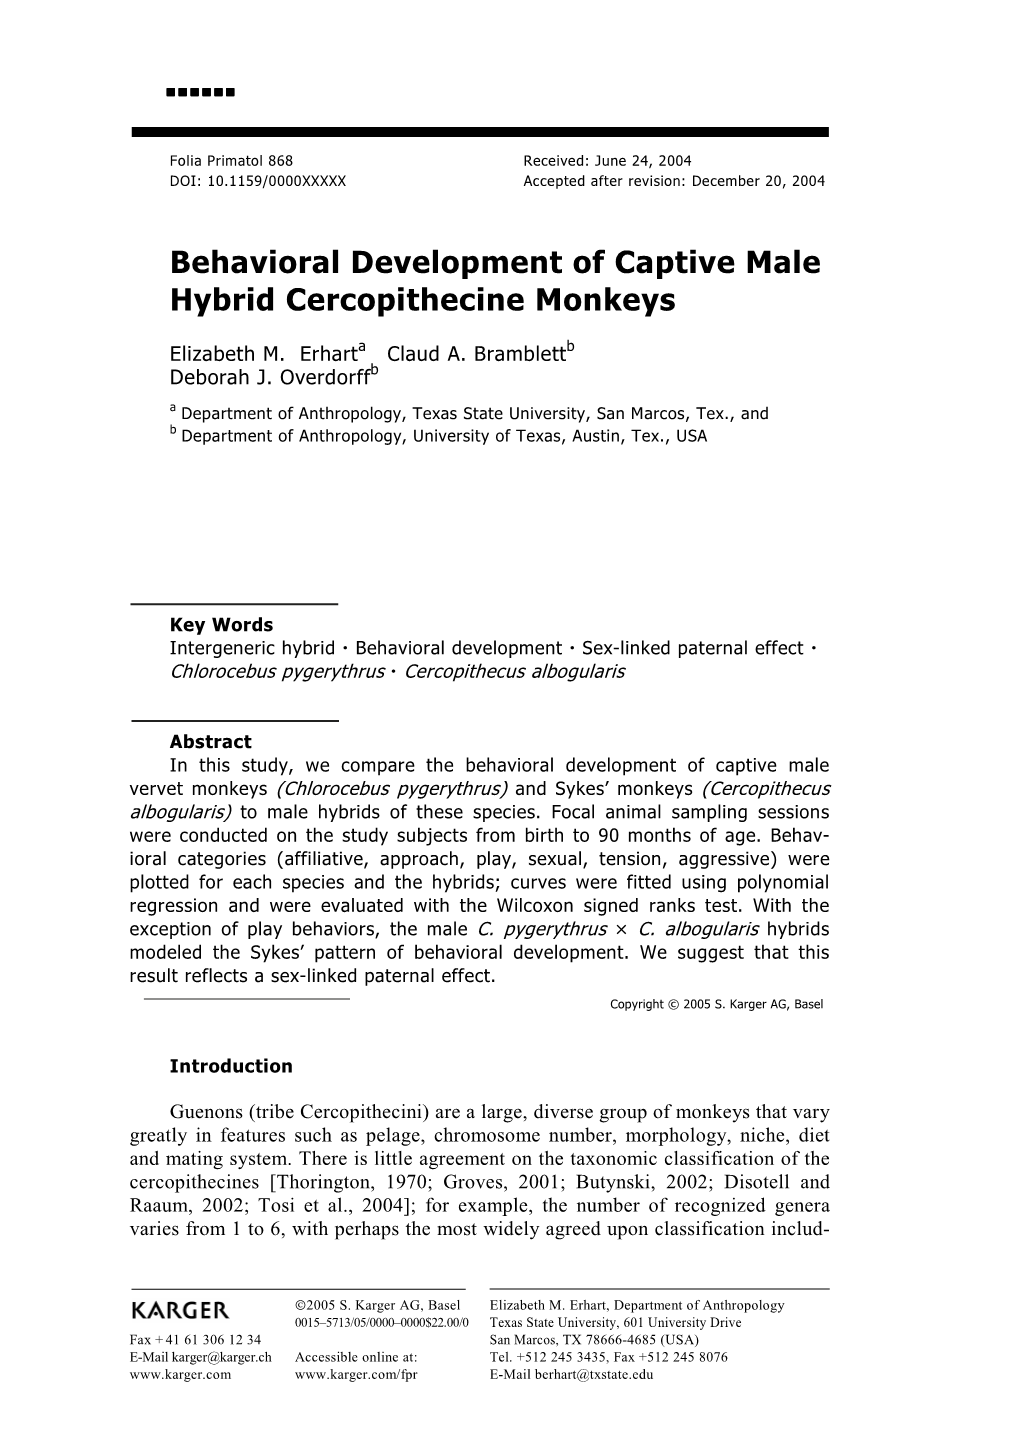 Behavioral Development of Captive Male Hybrid Cercopithecine Monkeys